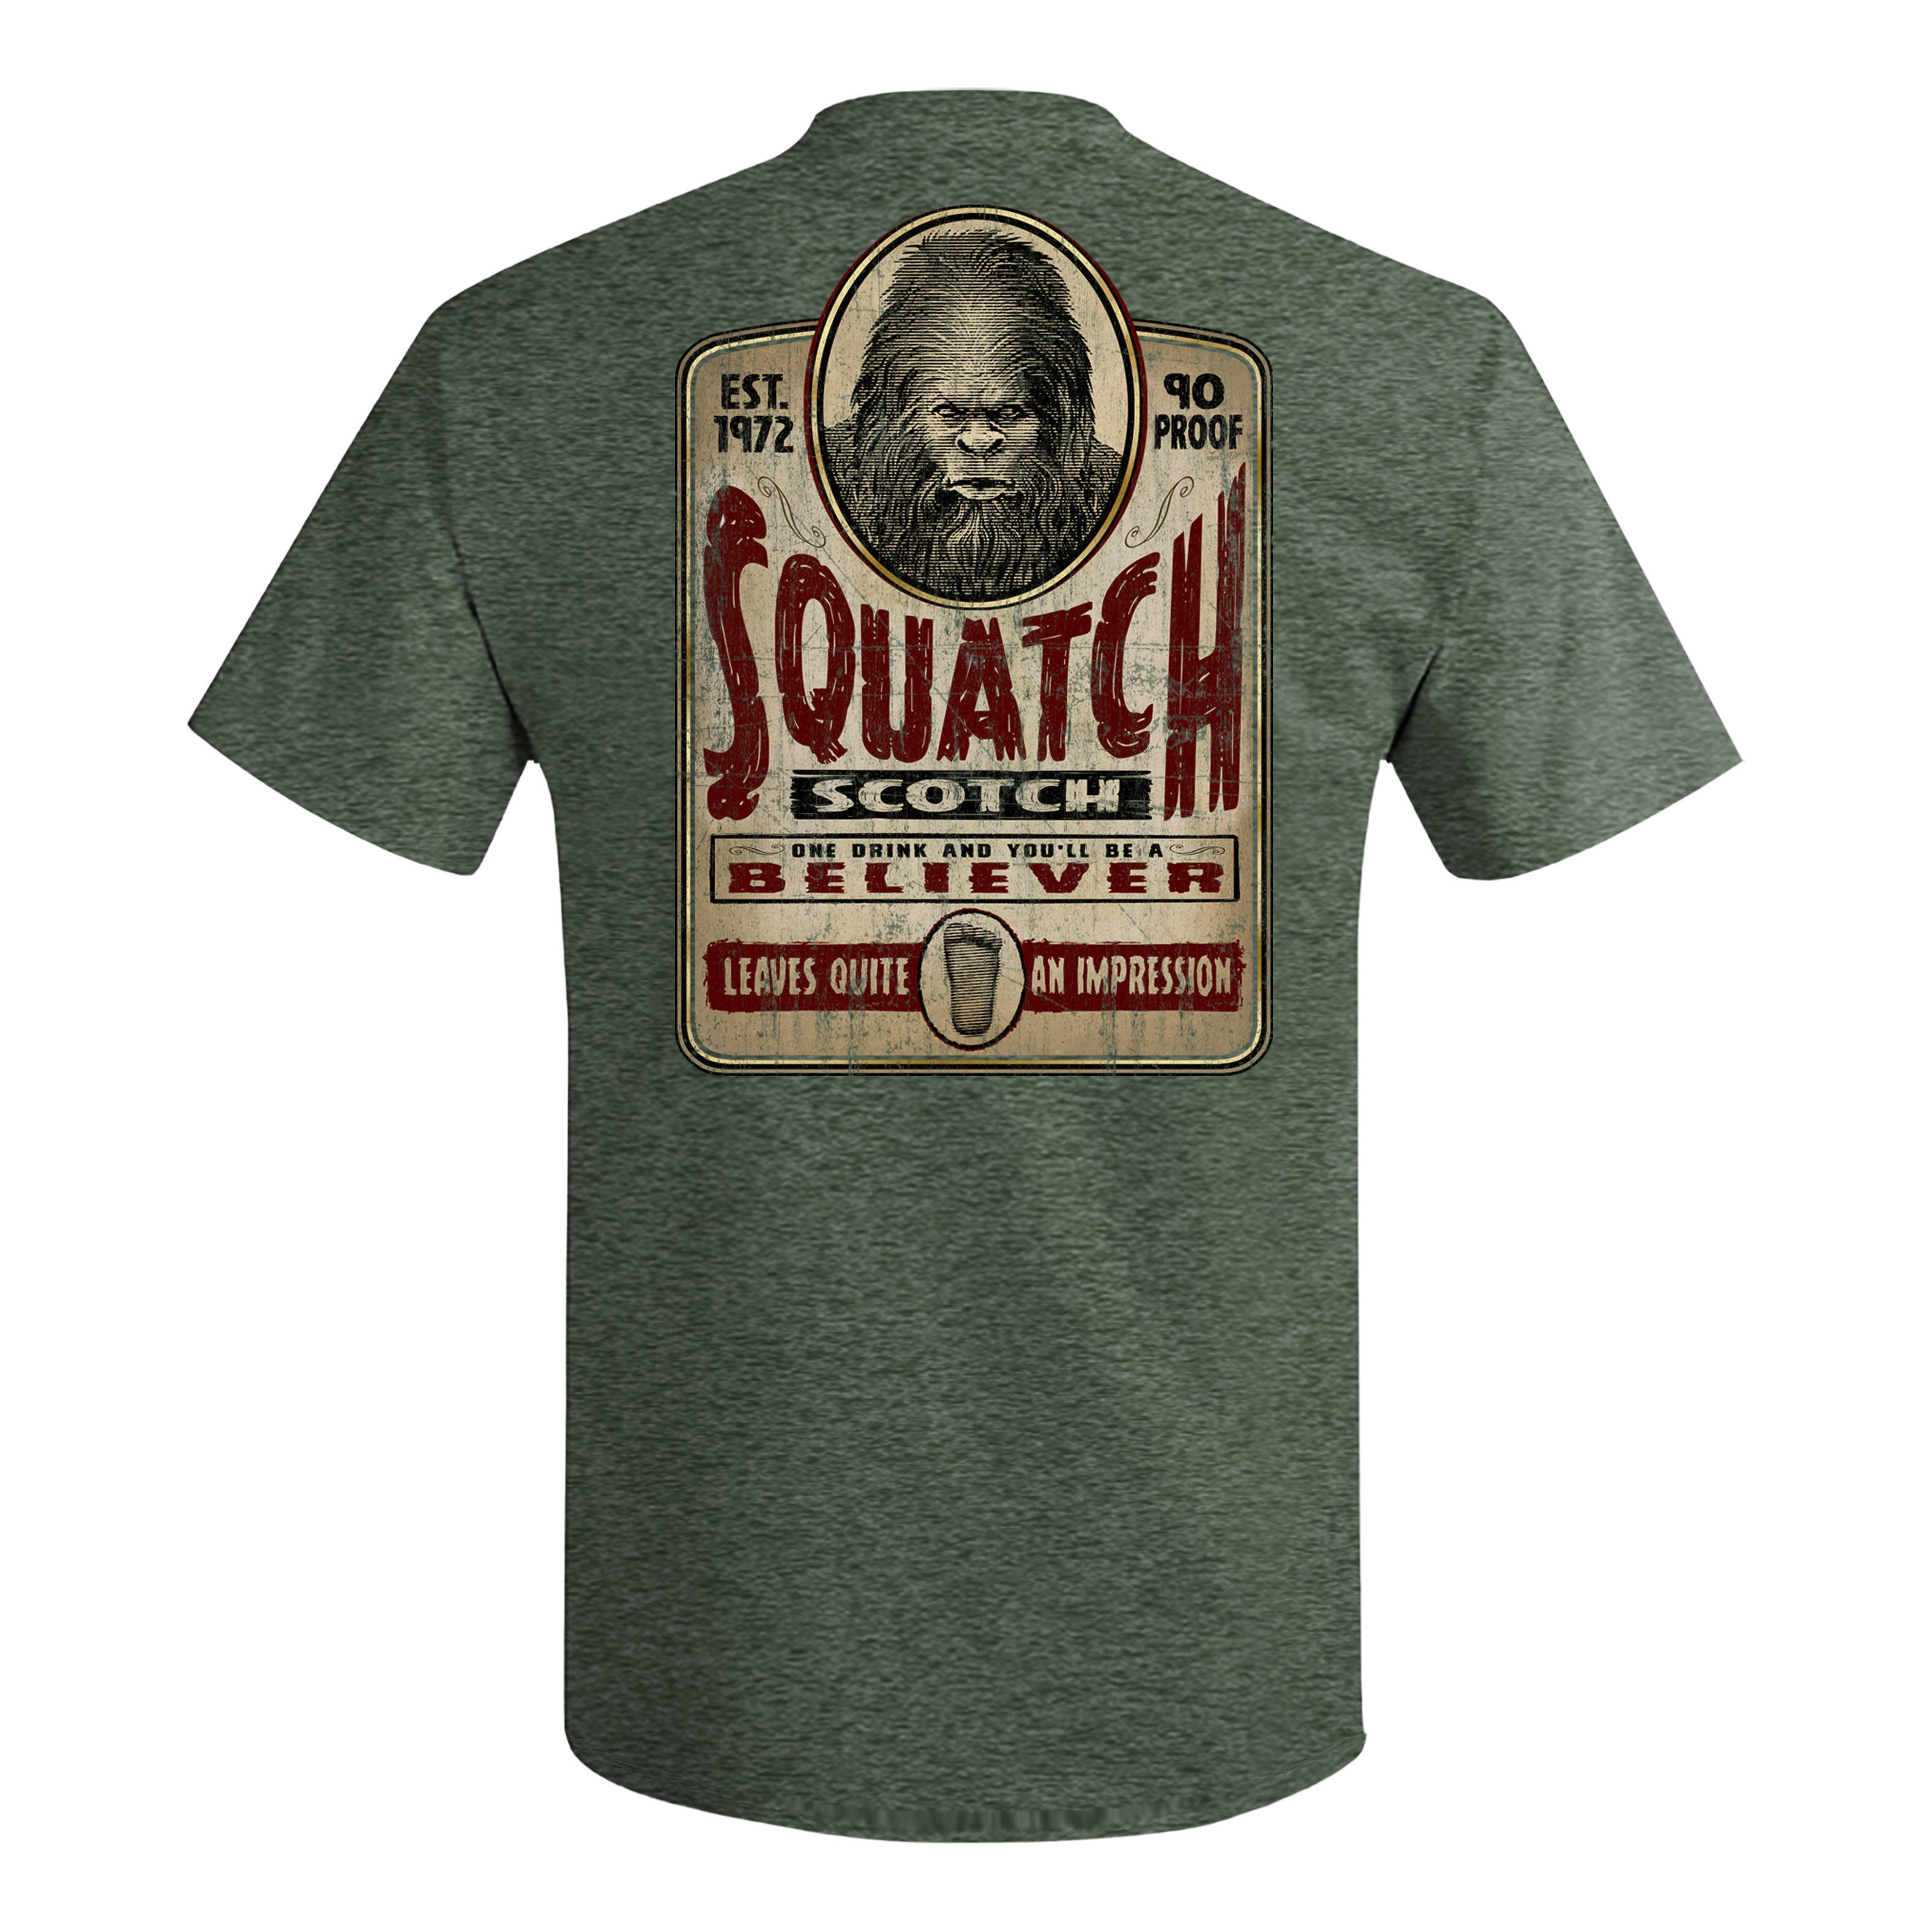 Bass Pro Shops Men’s Squatch Scotch Logo Short-Sleeve T-Shirt - back